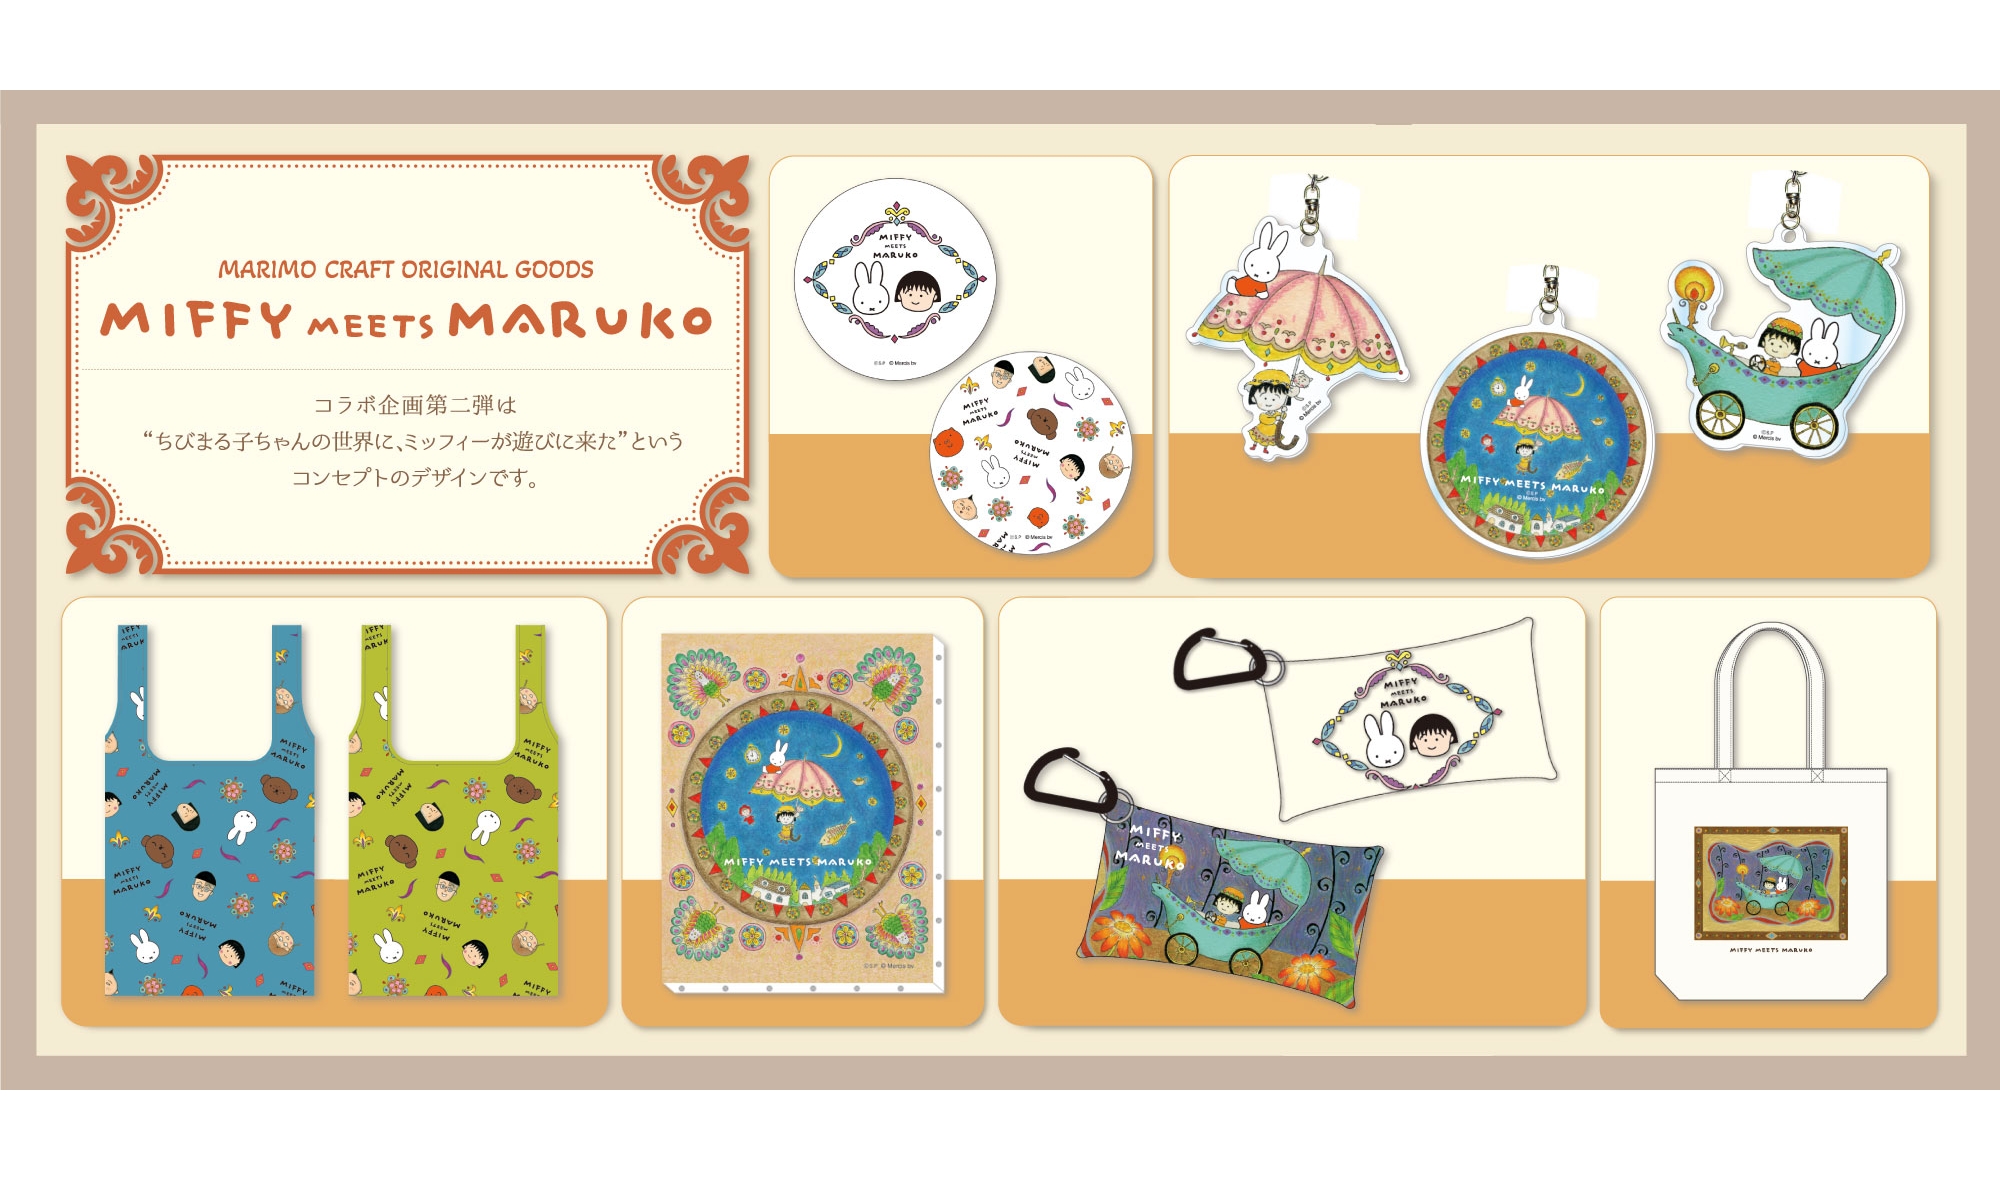 miffy-meets-maruko1-4